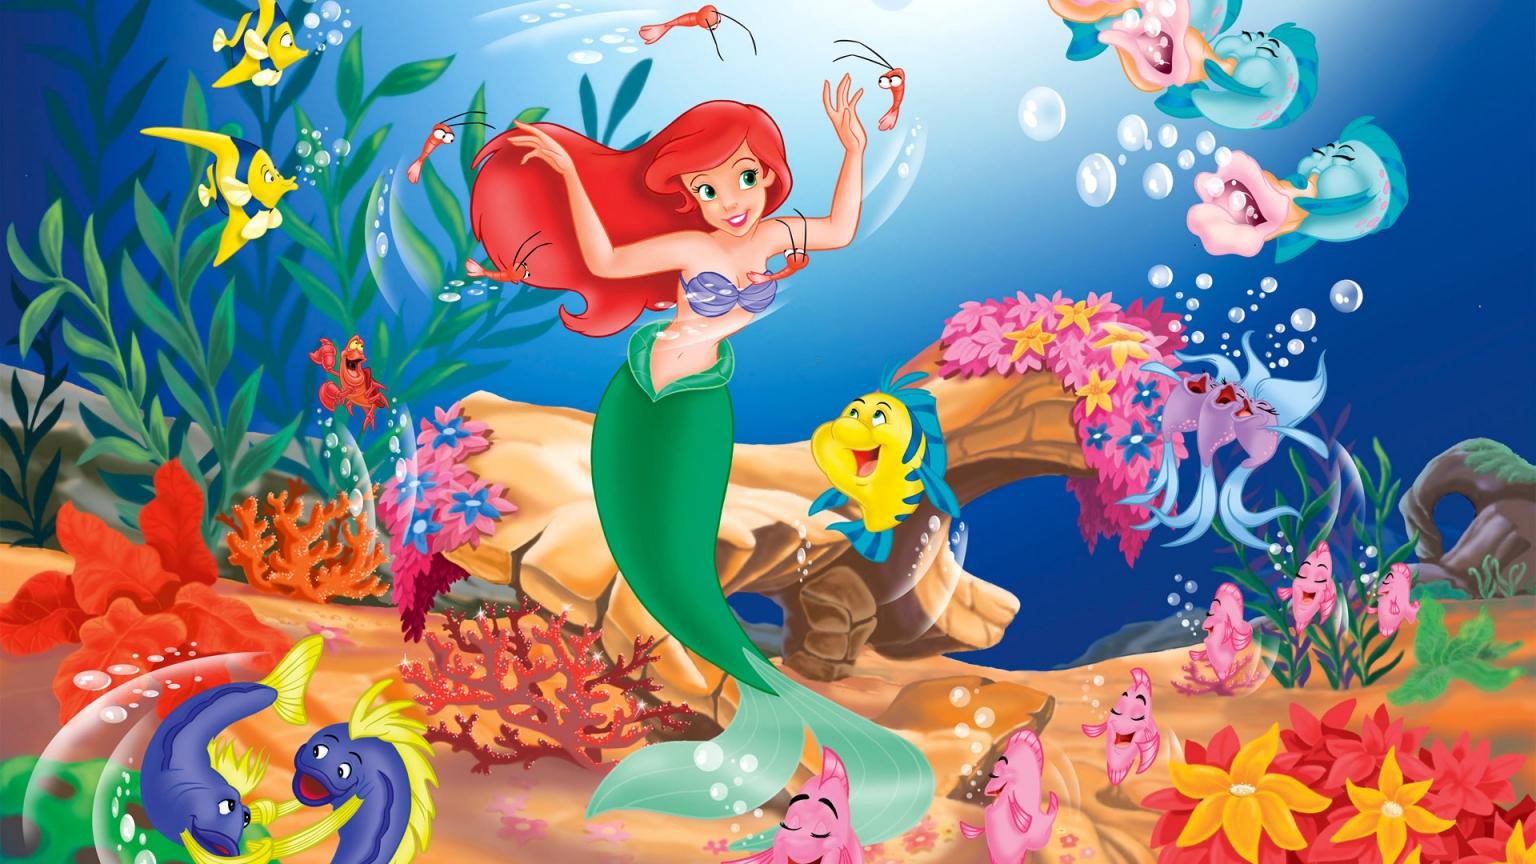 Little Mermaid Cartoon for 1536 x 864 HDTV resolution